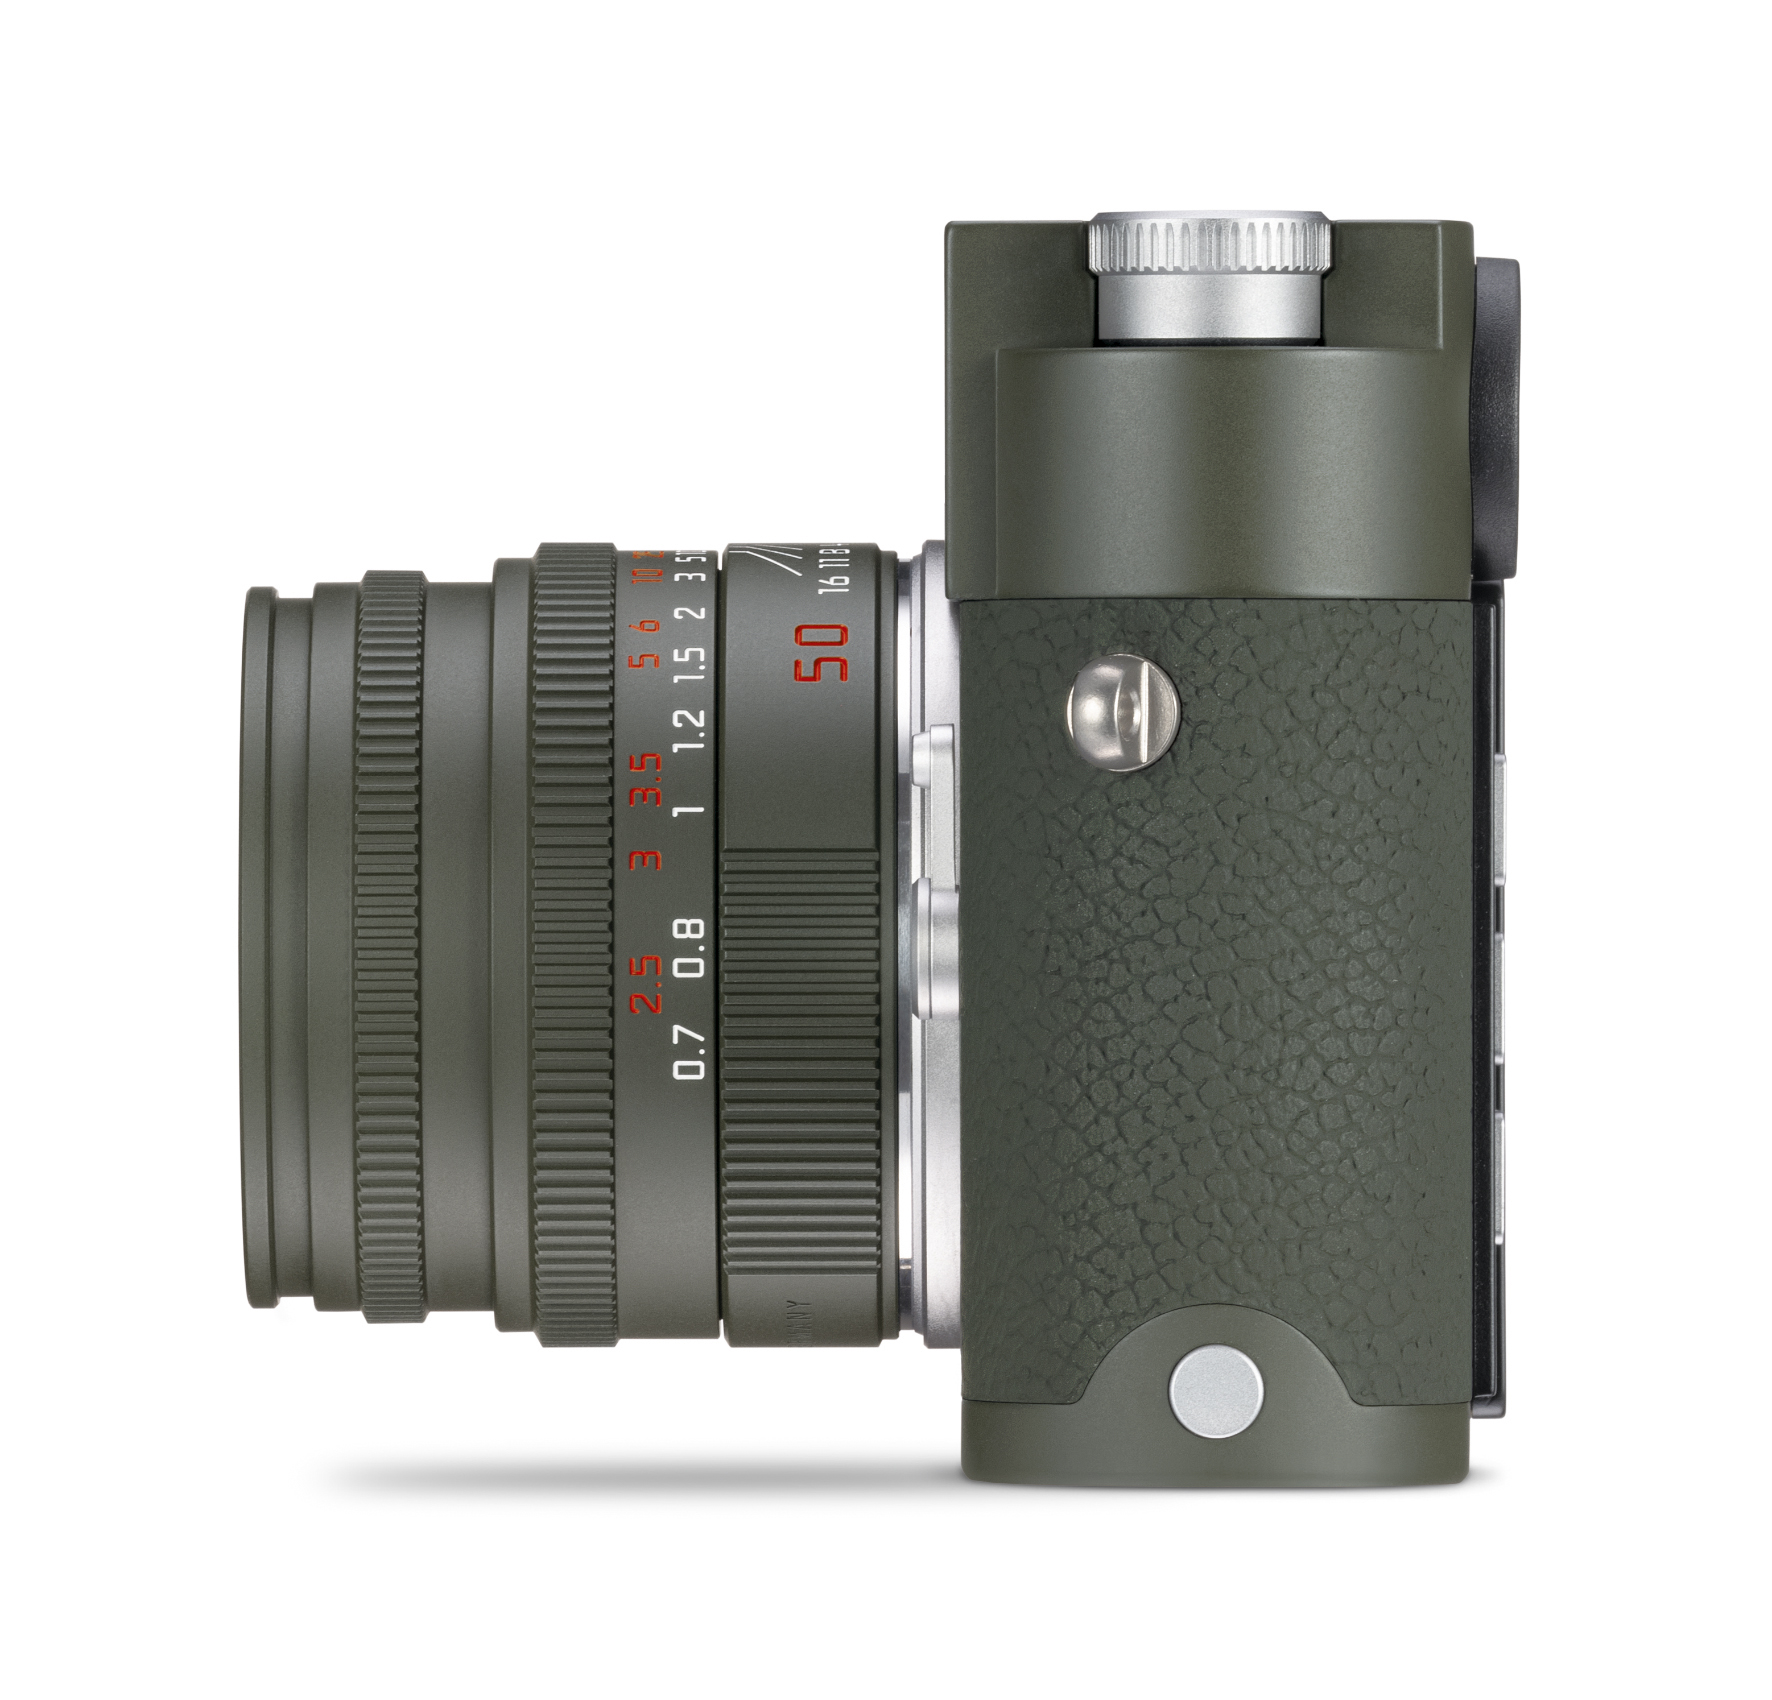 Leica M10-P Edition Safari